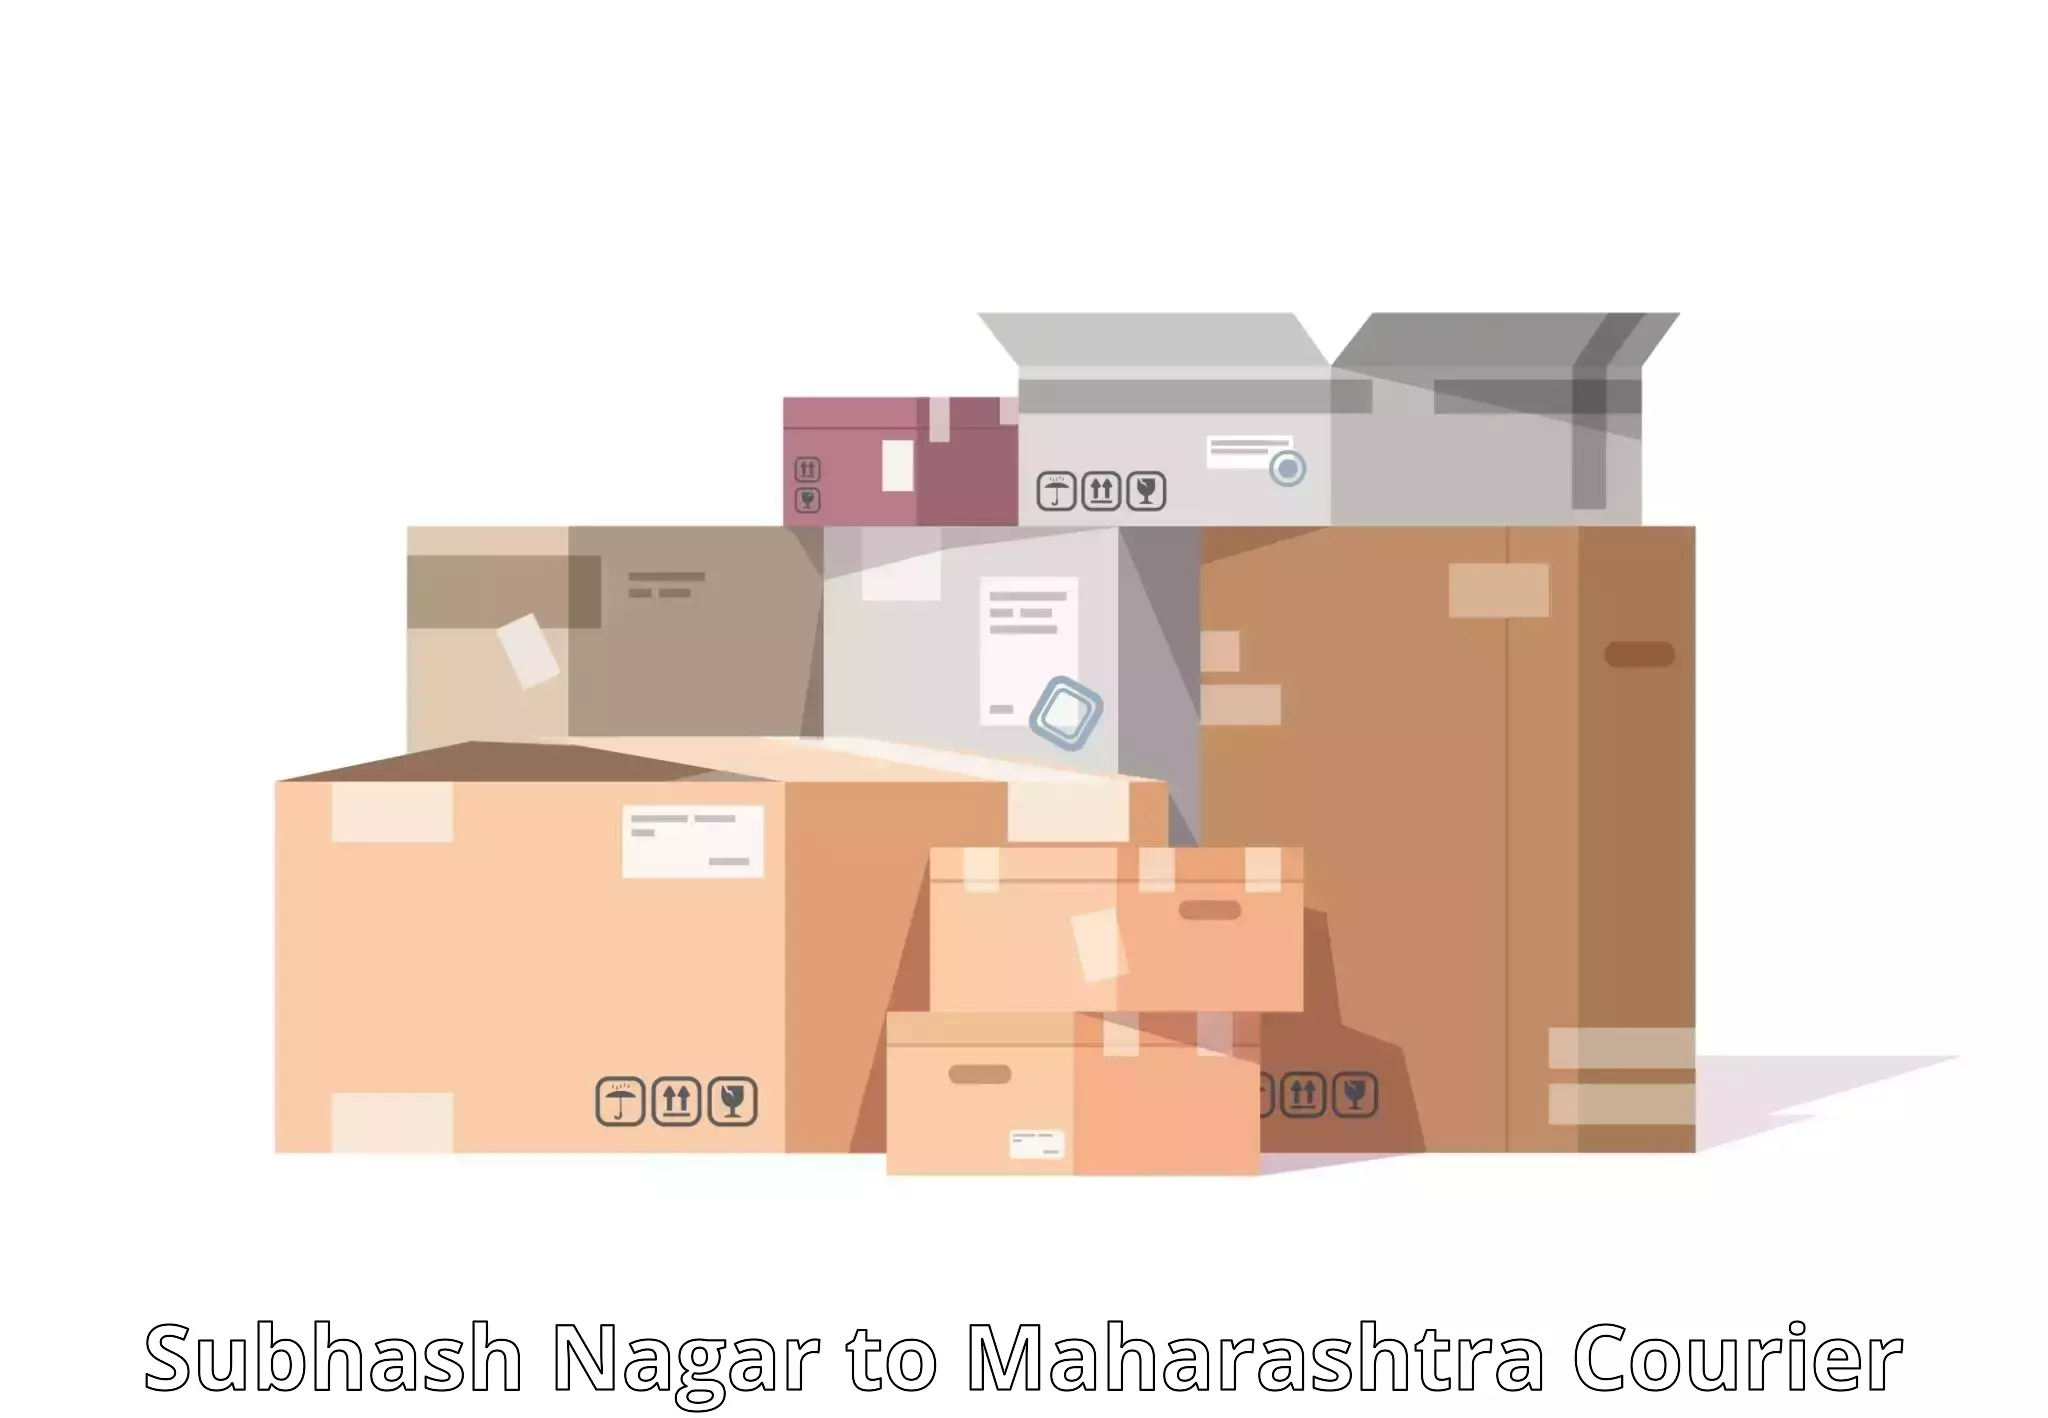 Digital courier platforms Subhash Nagar to Osmanabad